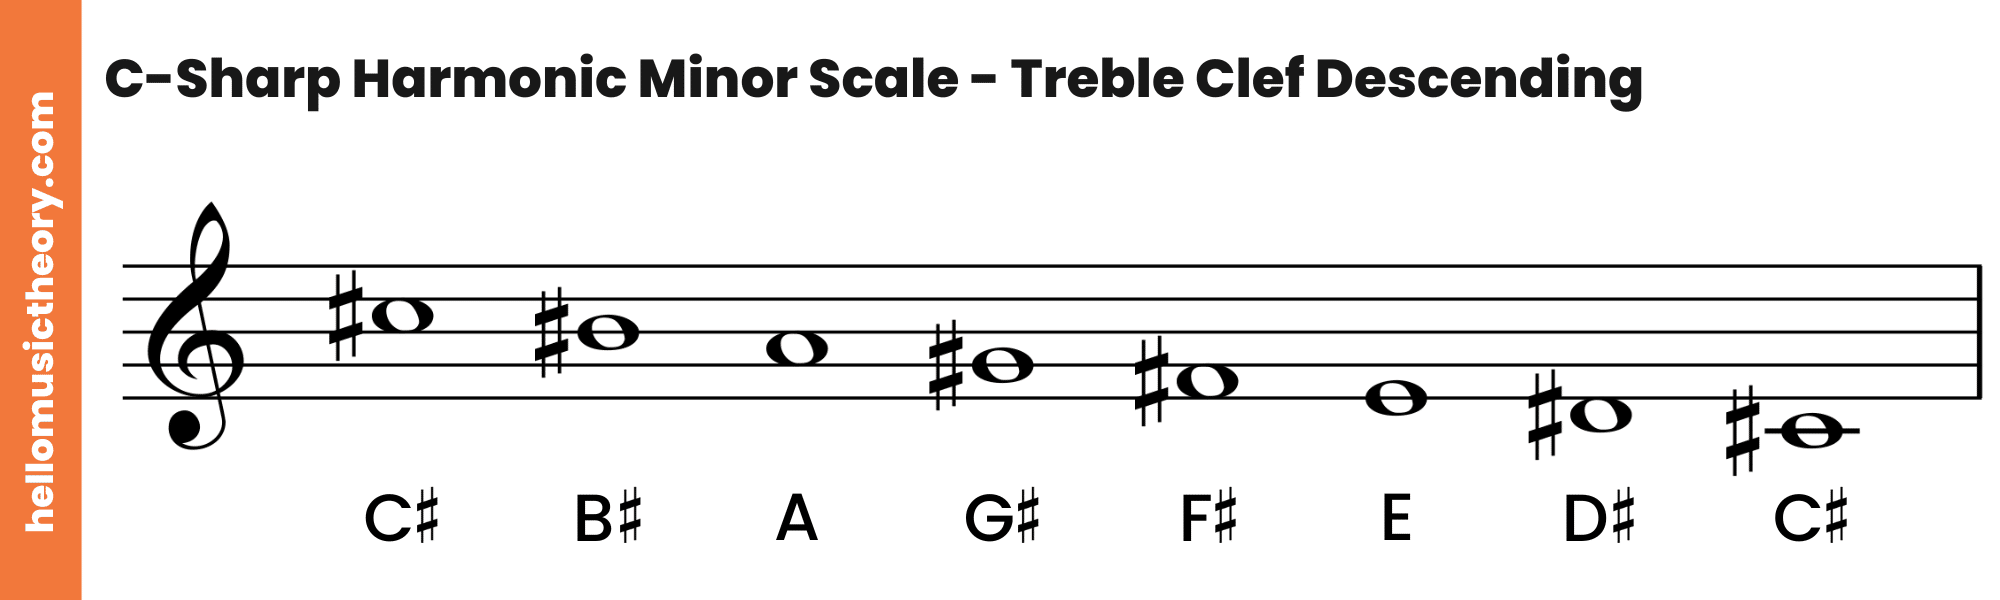 C-Sharp Harmonic Minor Scale Treble Clef Descending